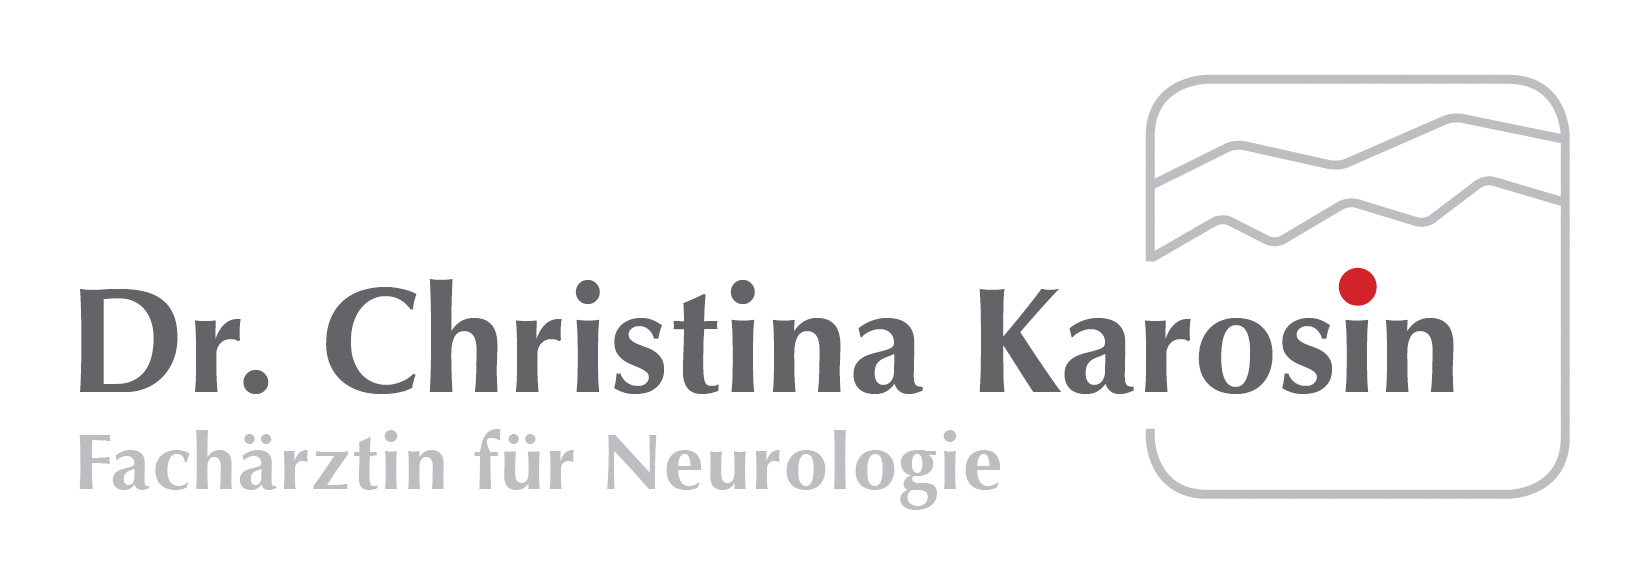 Dr. Christina Karosin